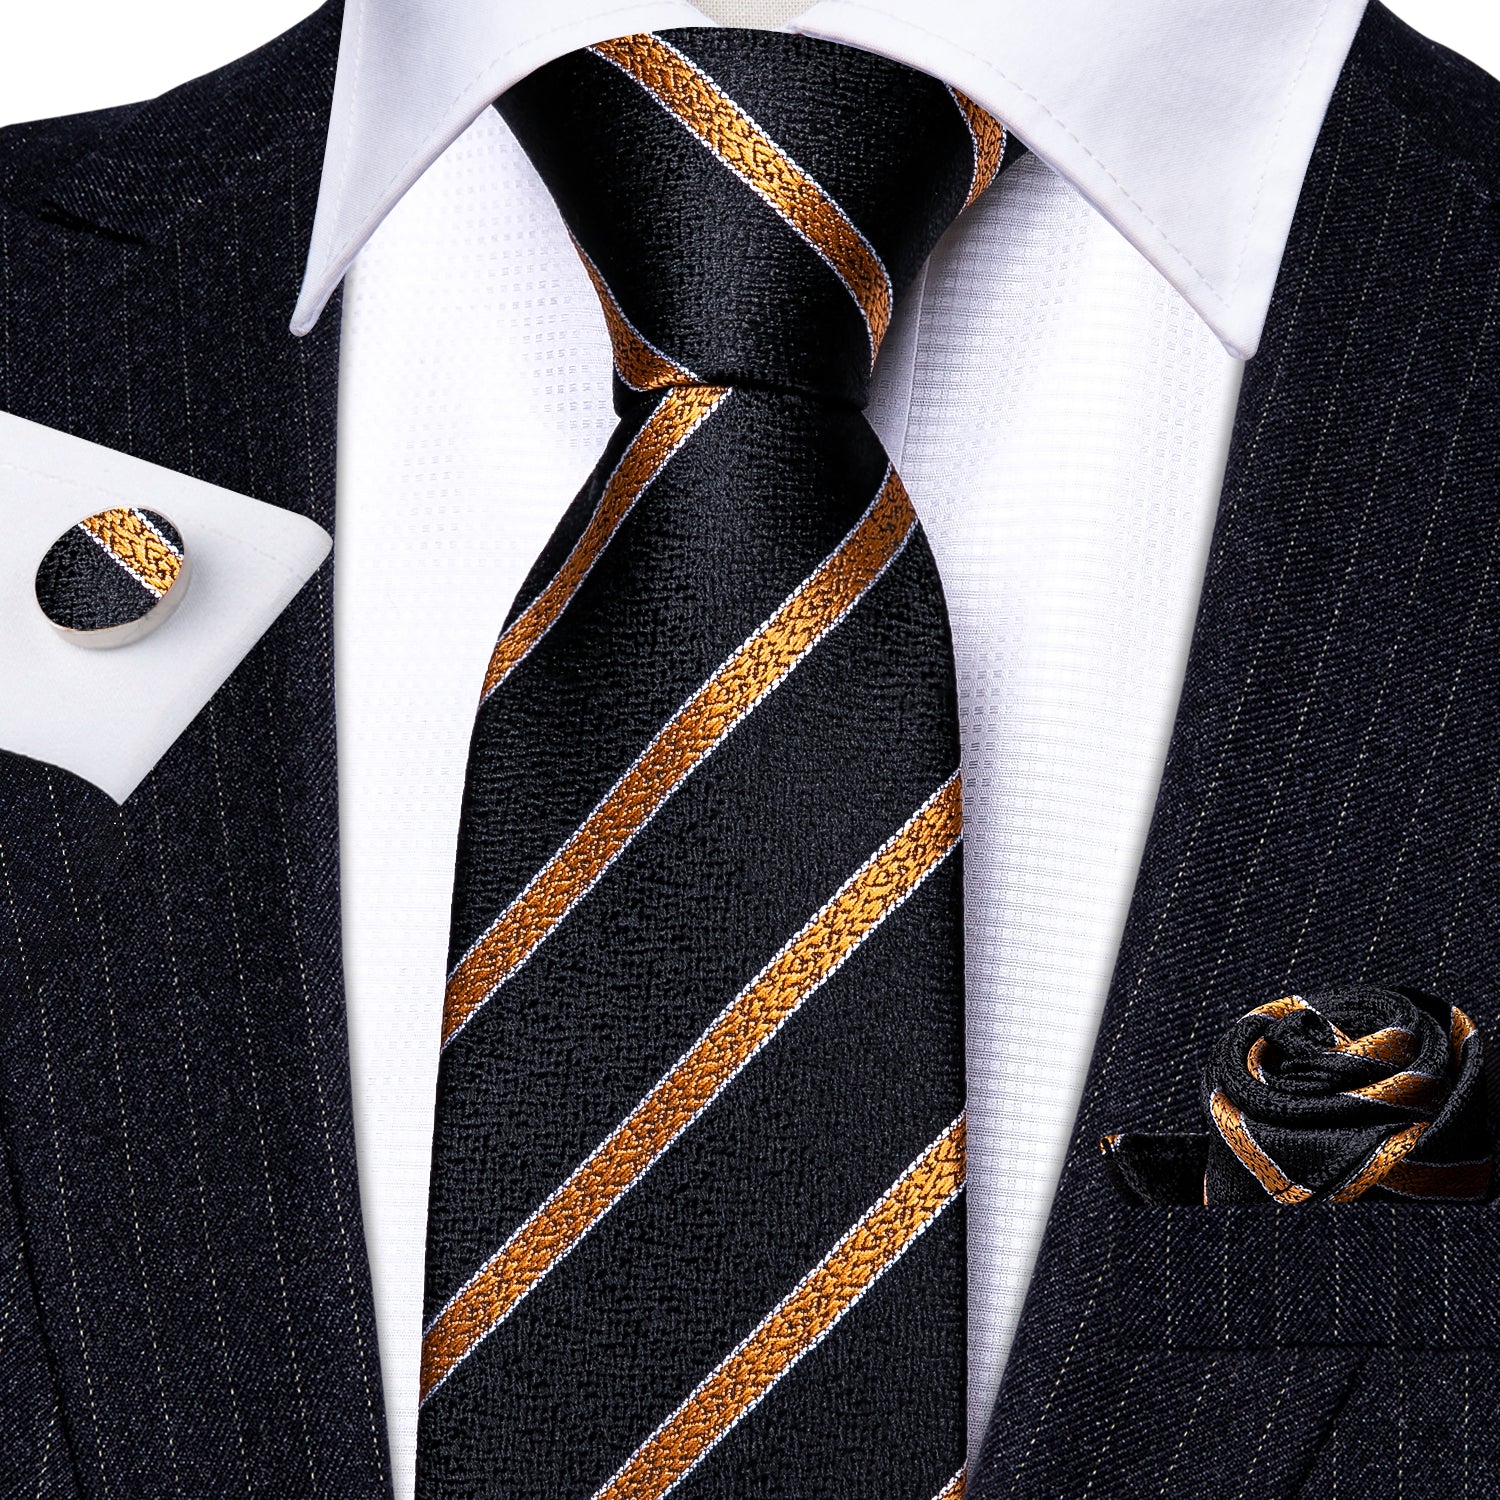 New Black Golden Striped Silk Tie Hanky Cufflinks Set